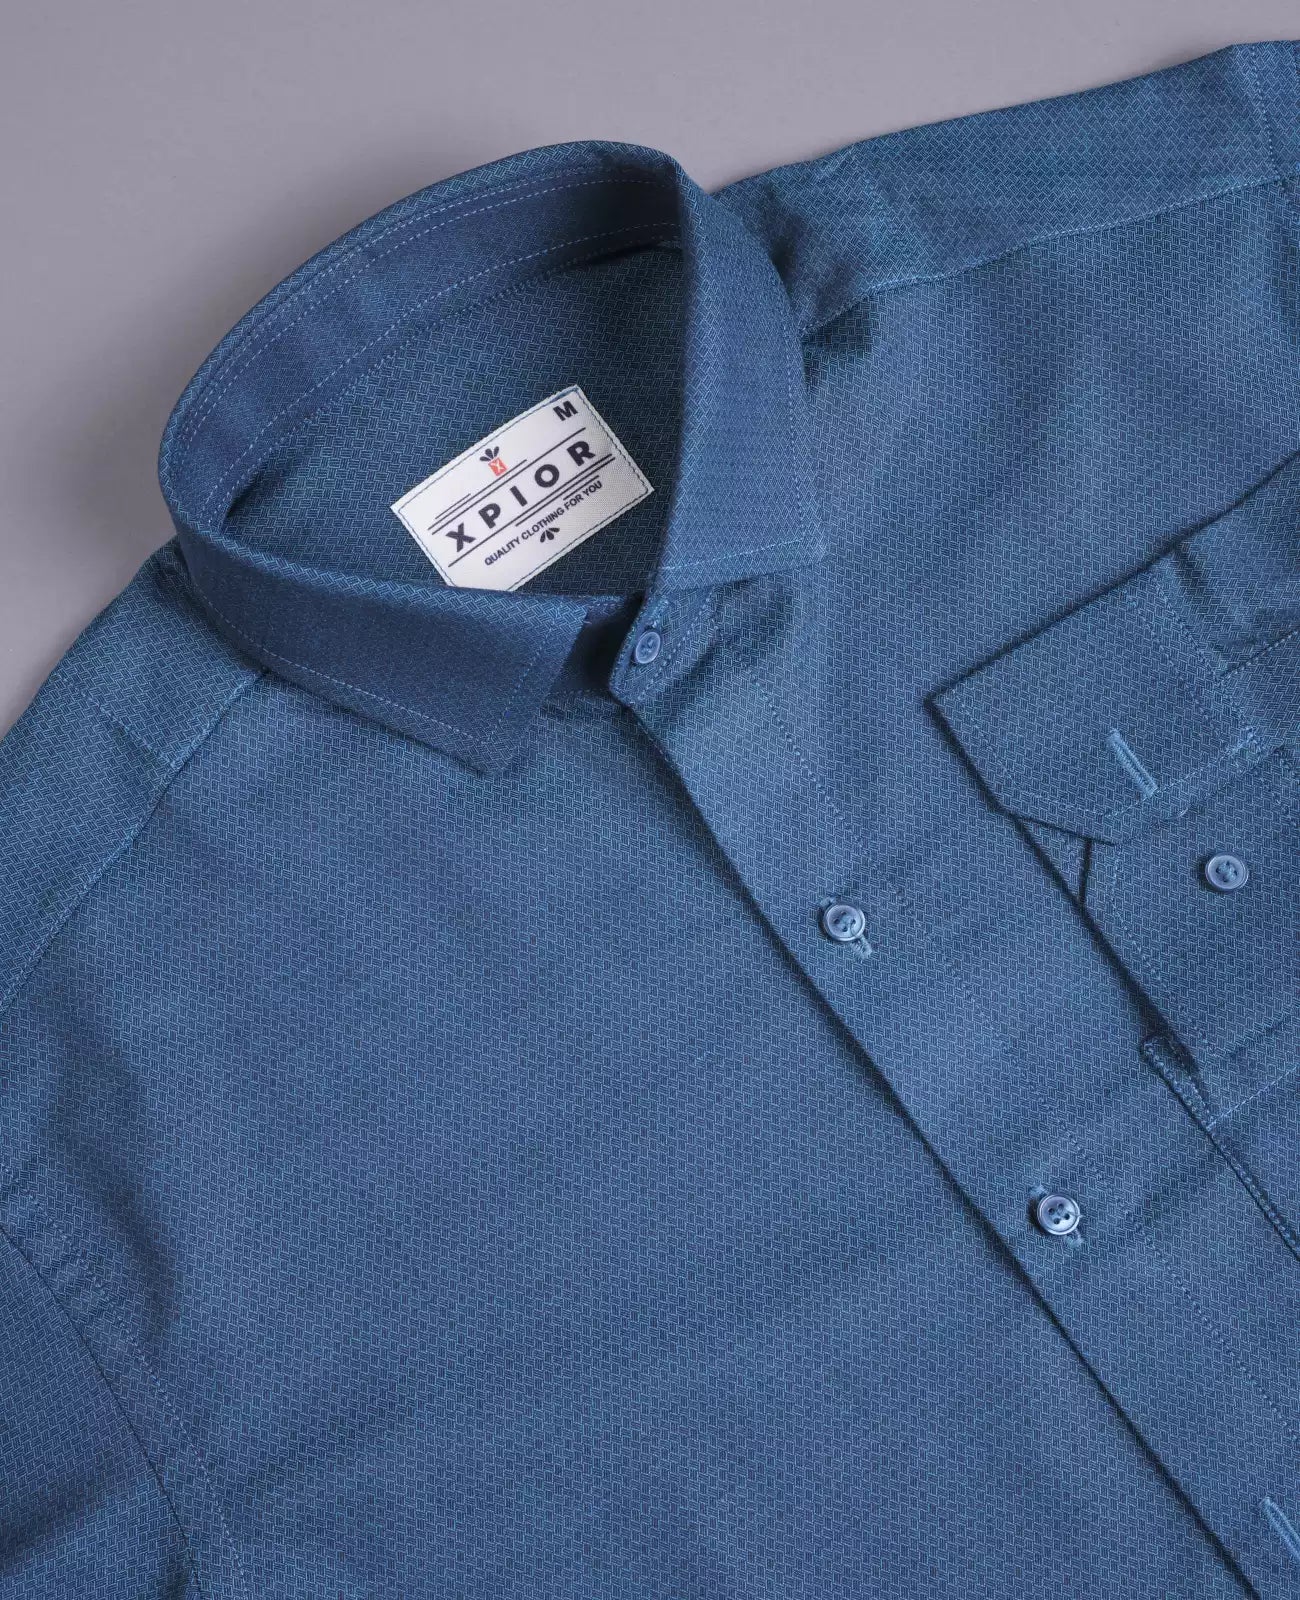 Tactful Men's Full Sleeves Plain Blue Shirt Premium Collection Cotton Fabric